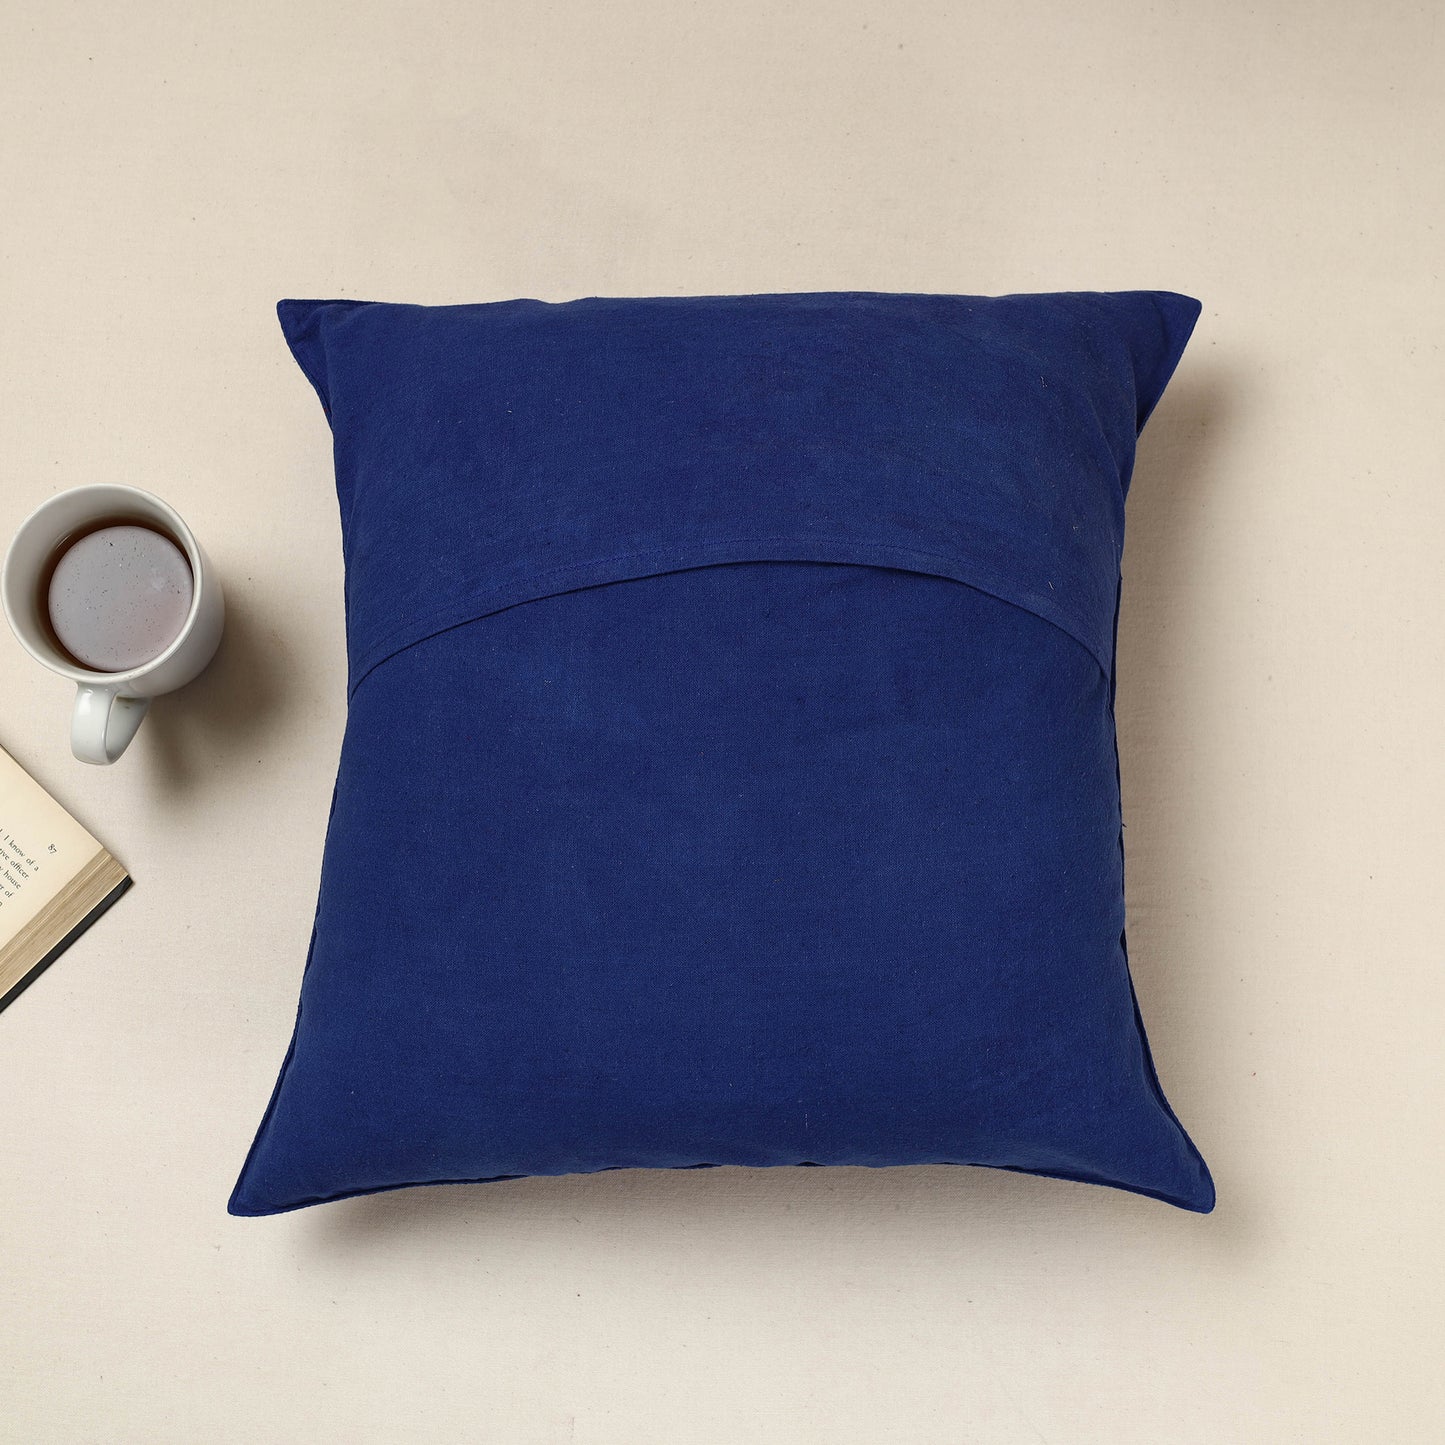 Blue - Urmul Kashida Stitch Handloom Cotton Cushion Cover (16 x 16 in)